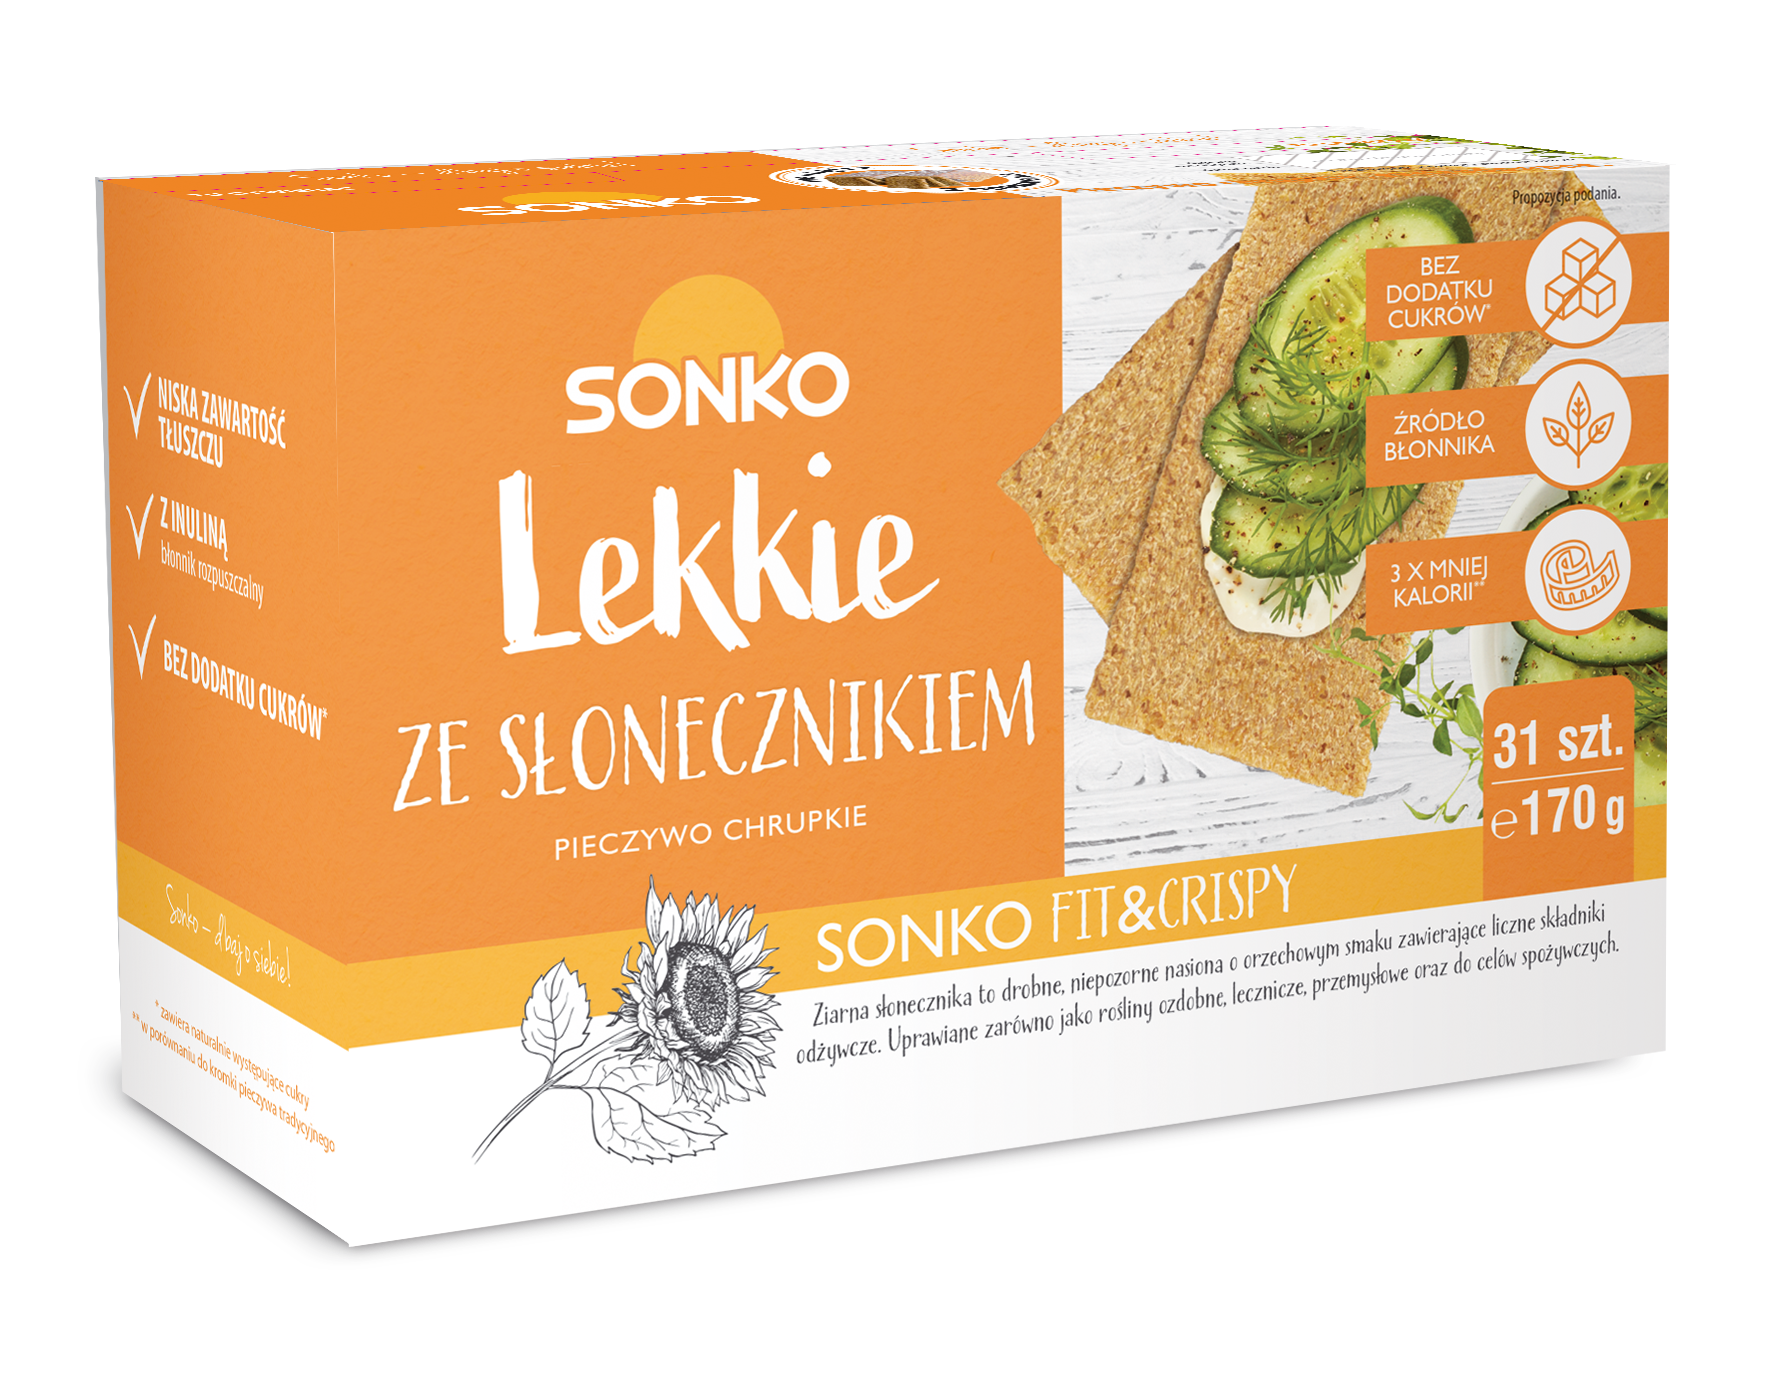 Sonko helles Brot mit Sonnenblumenkernen